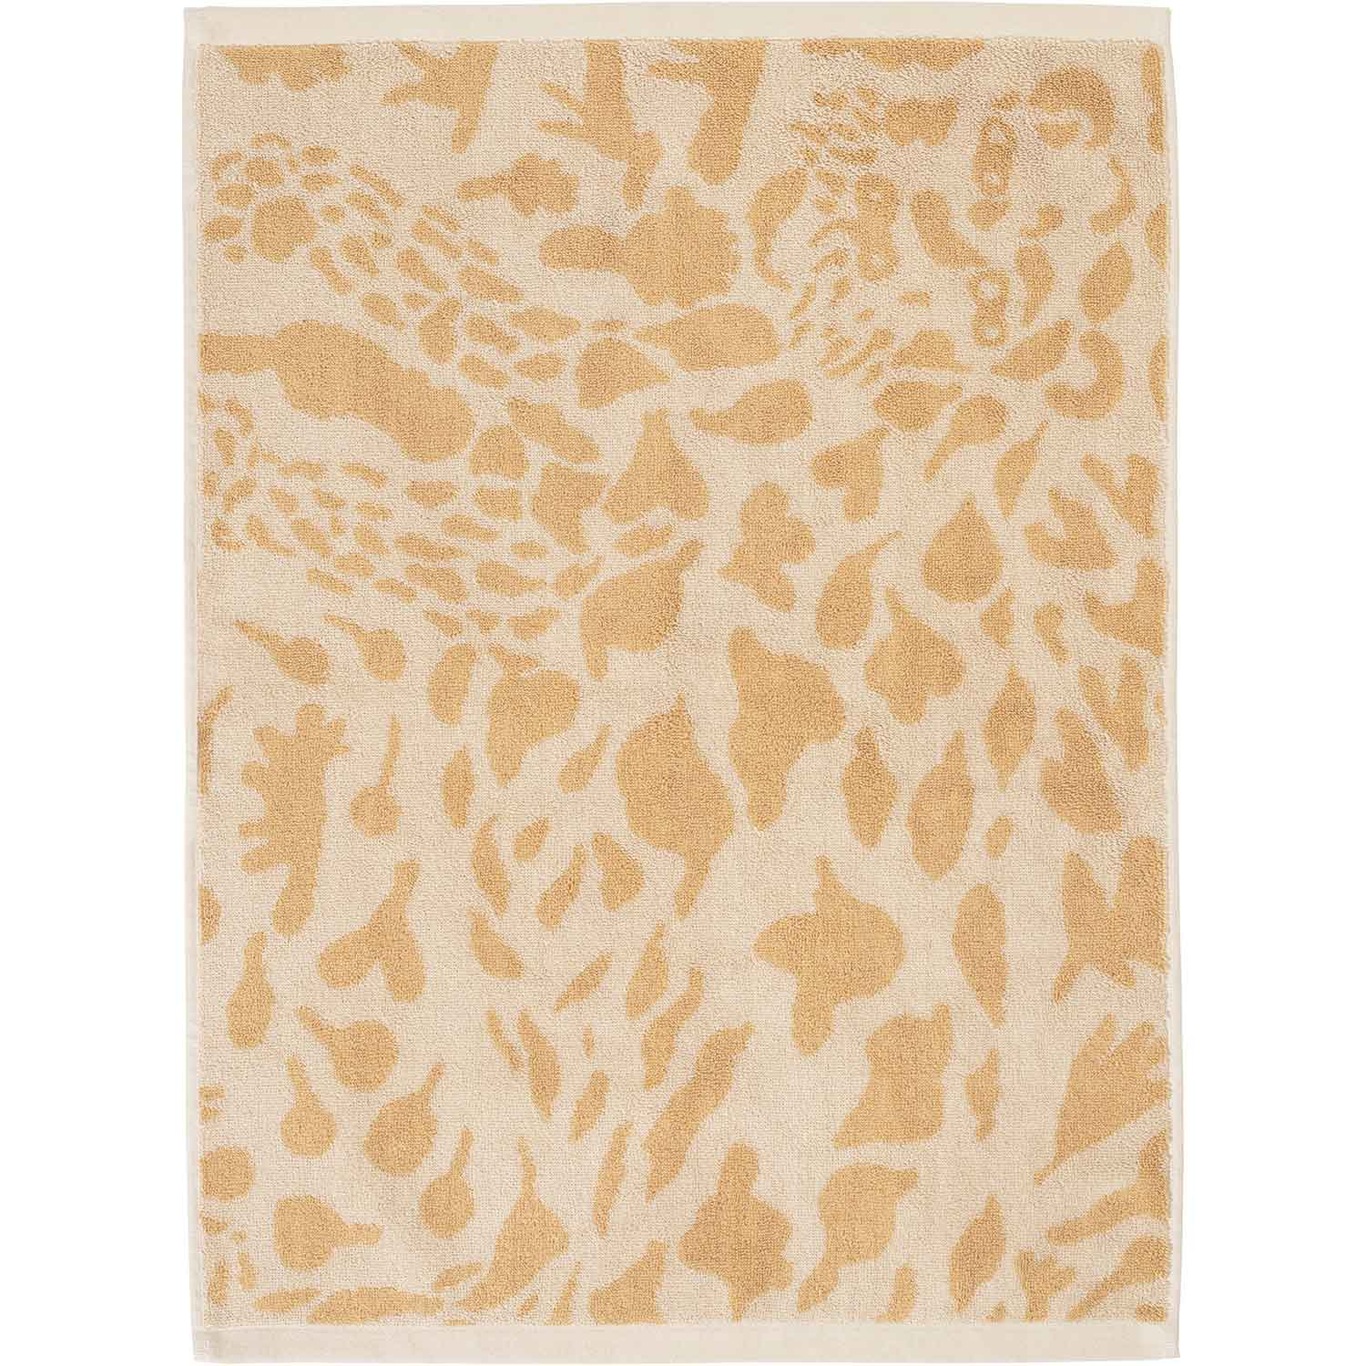 Oiva Toikka Collection Håndkle, 50x70 cm, Cheetah Brown